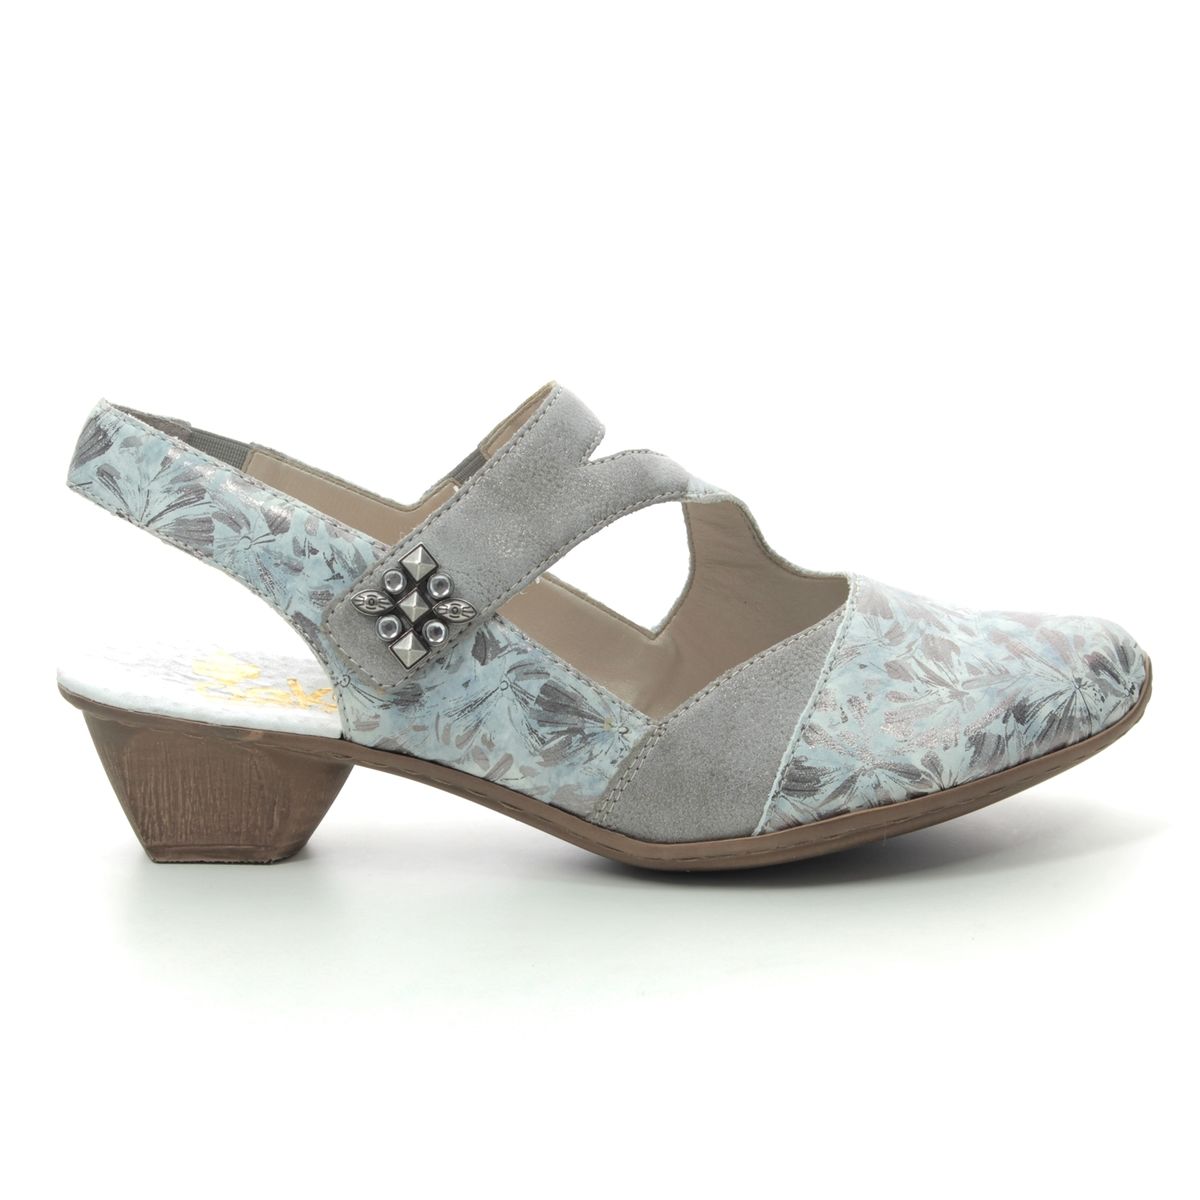 Rieker 49787-90 Silver metallic Mary Jane Shoes